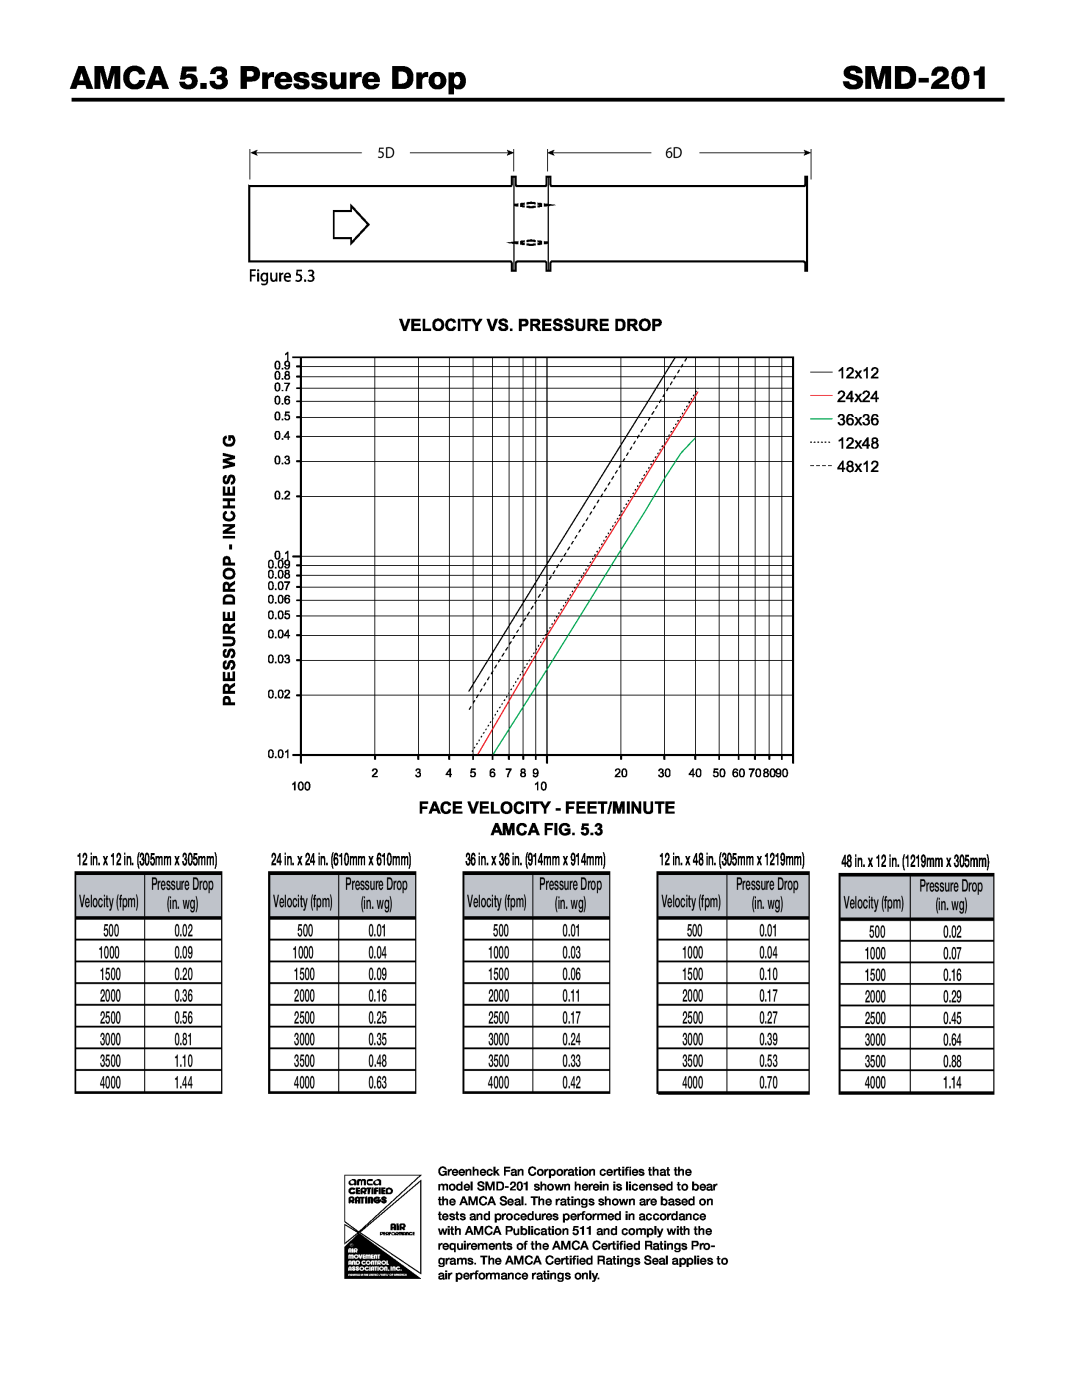 Greenheck Fan SMD-201 dimensions AMCA 5.3 Pressure Drop 